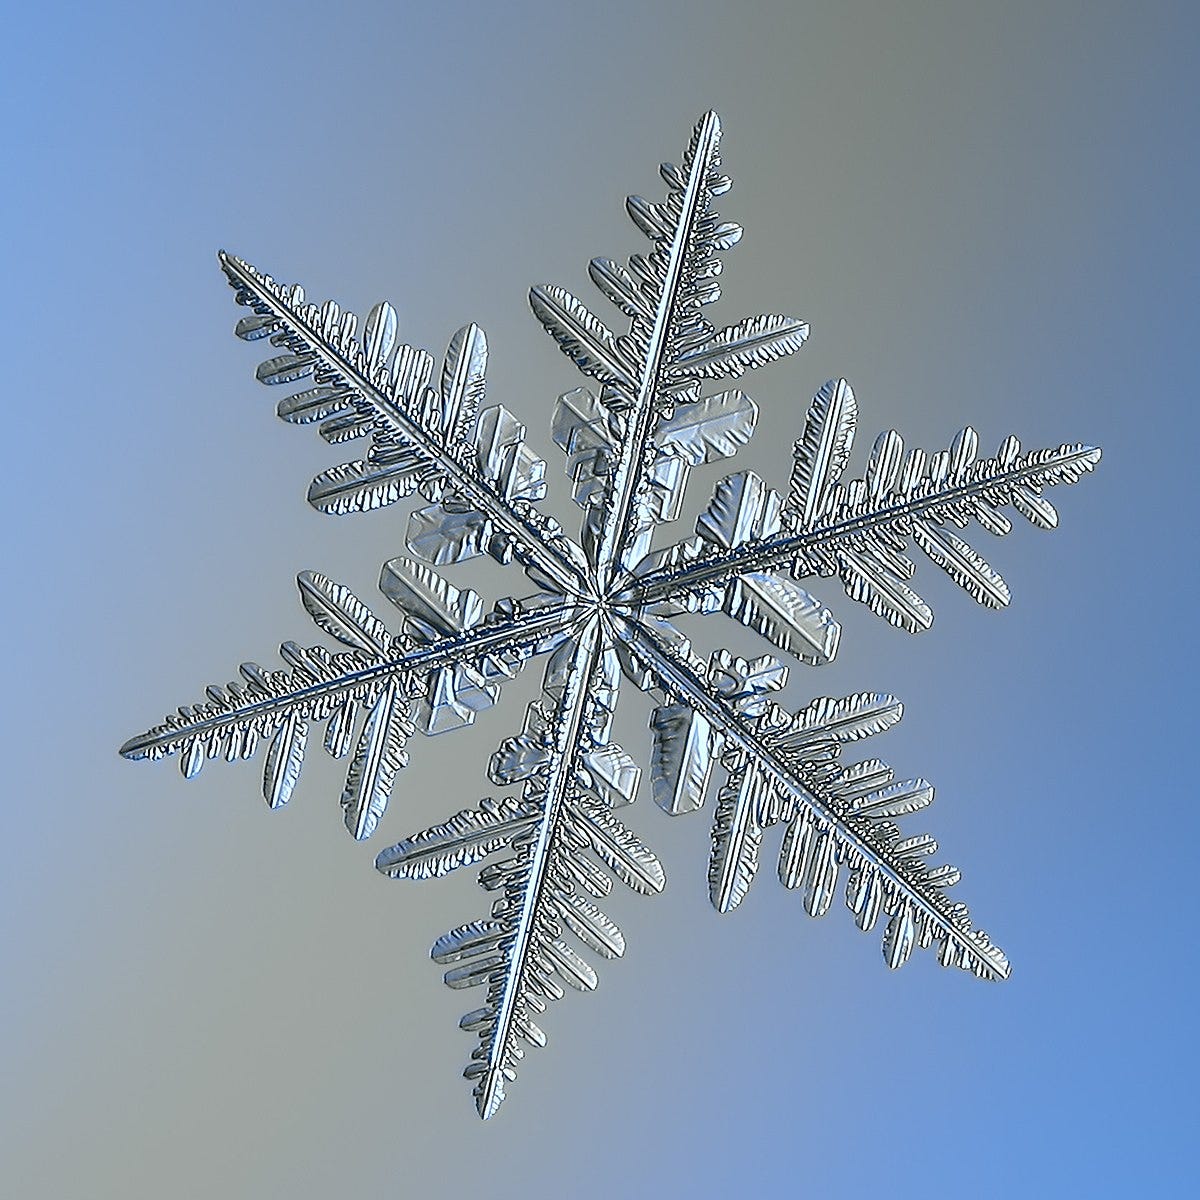 snowflake - Wikidata